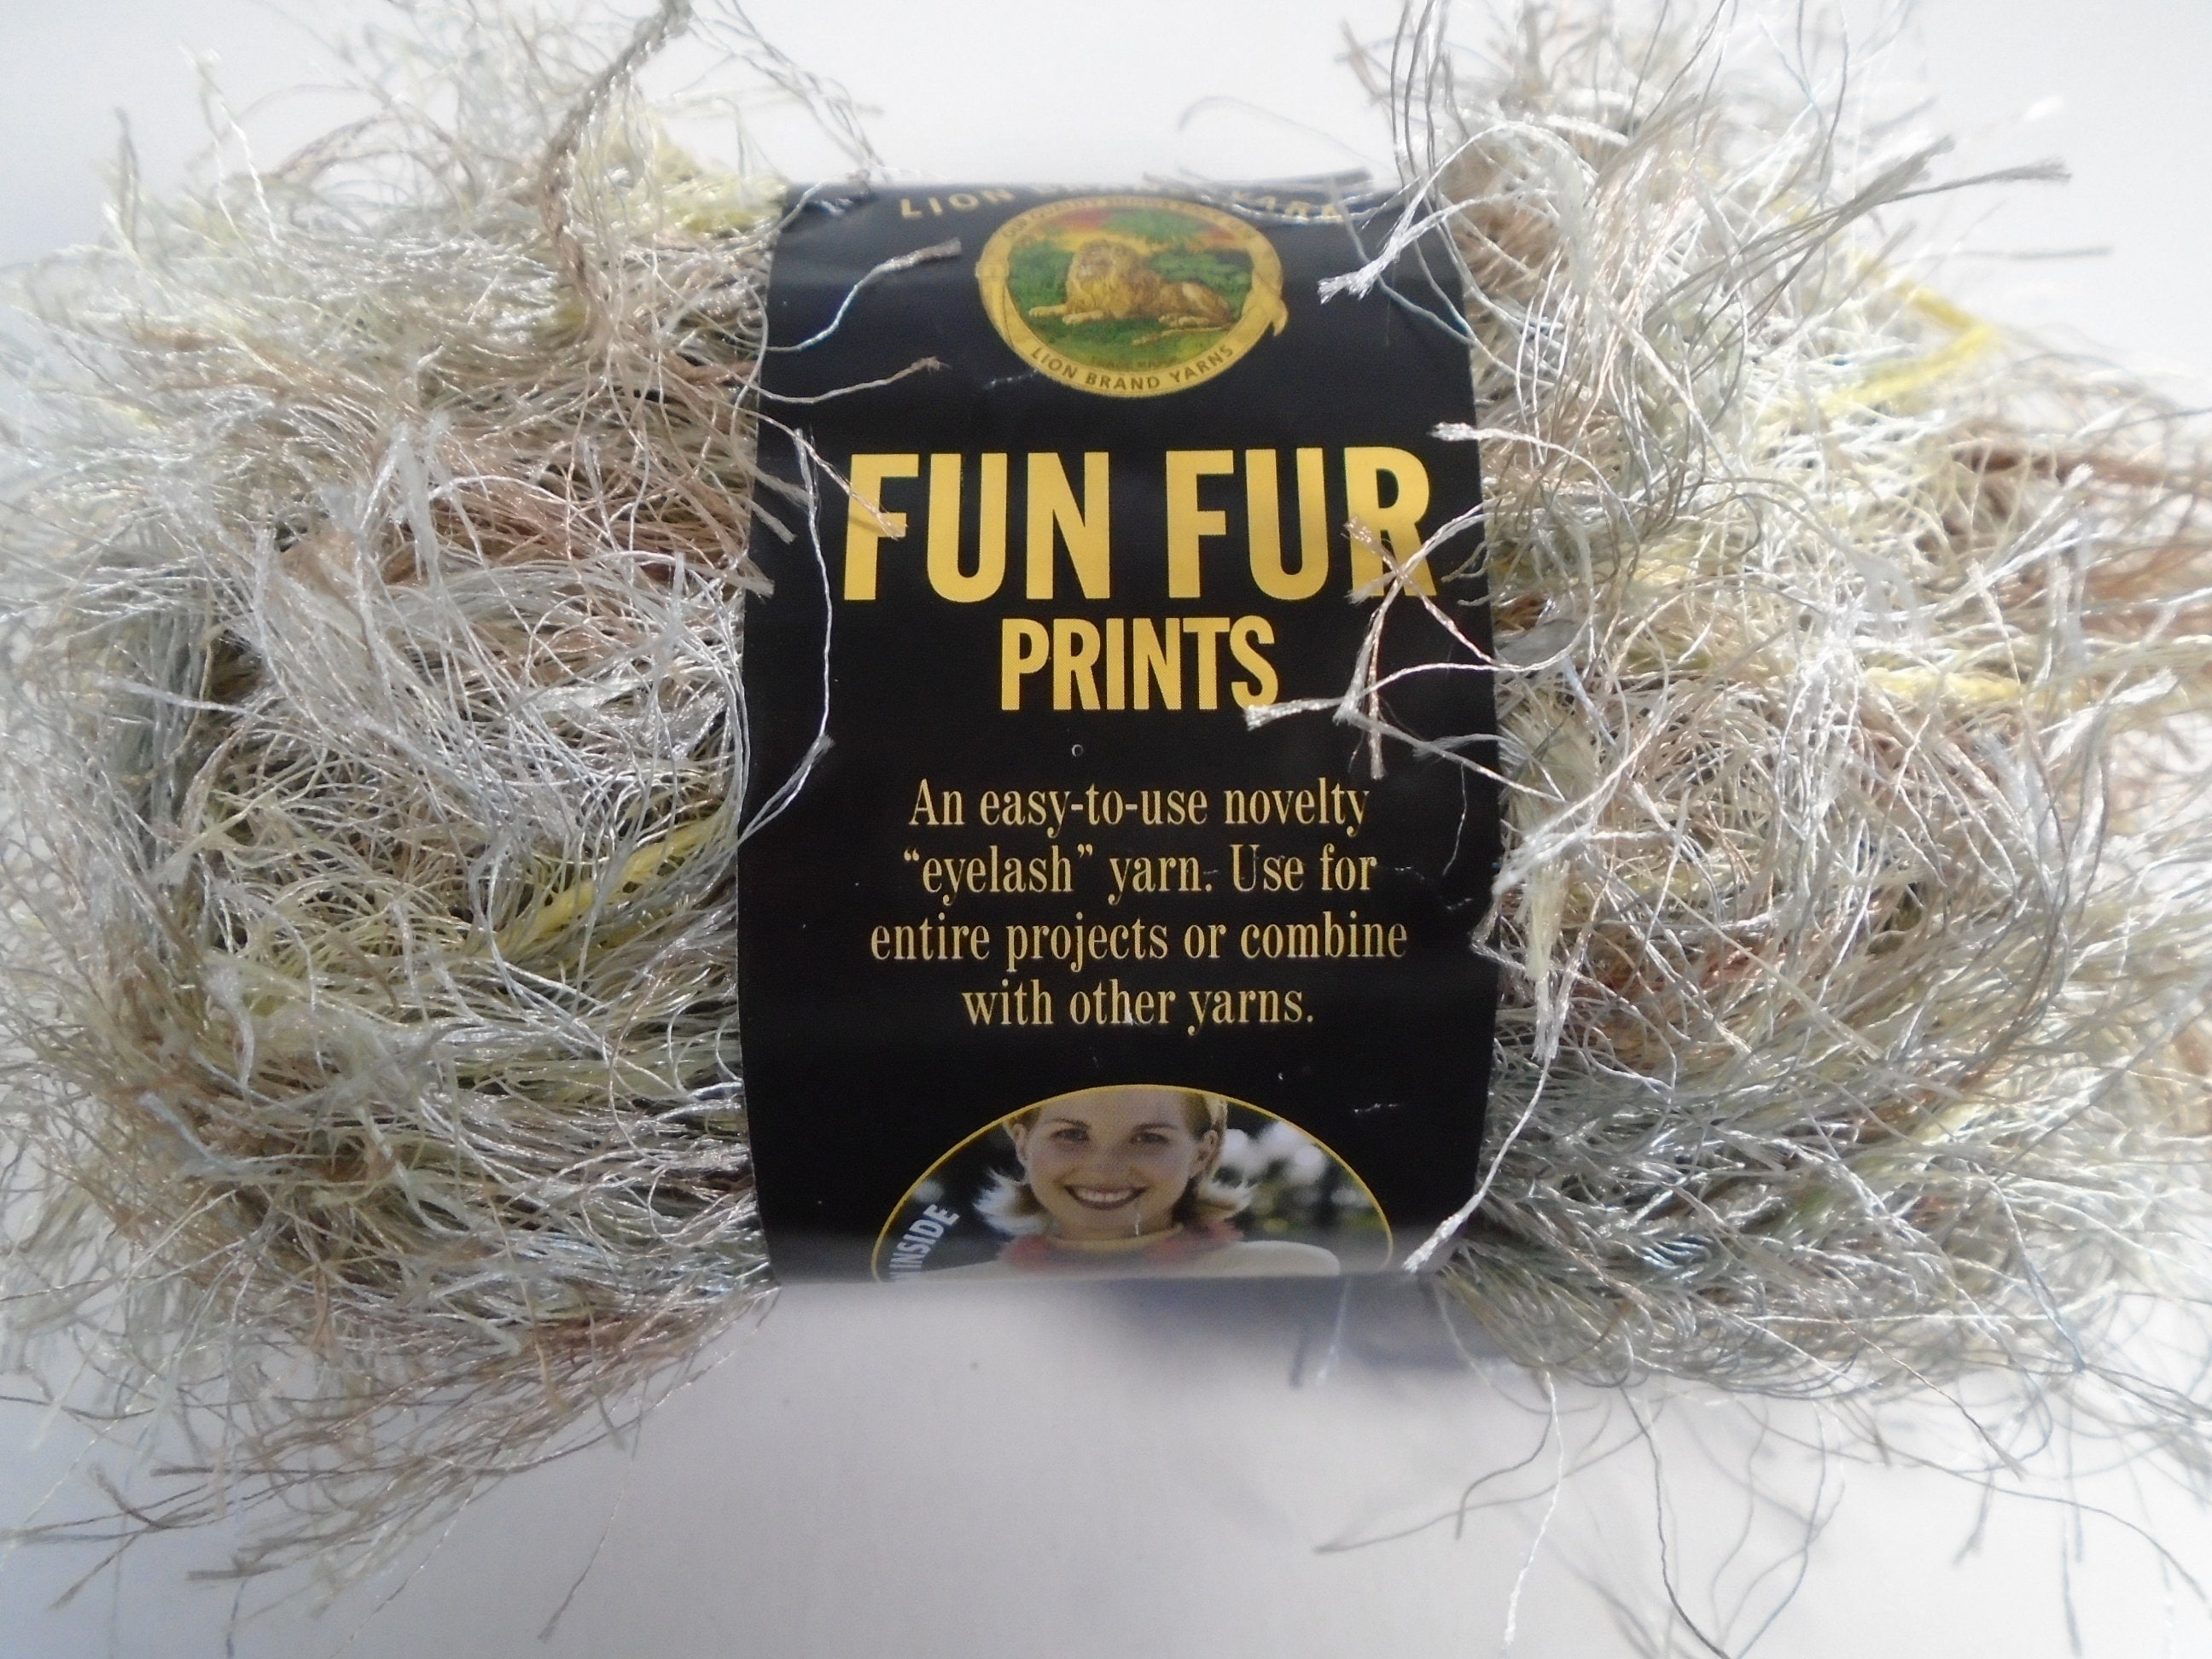 Fun Fur Prints Yarn Lion Brand Lot of 4 Skeins Eyelash Faux Fur